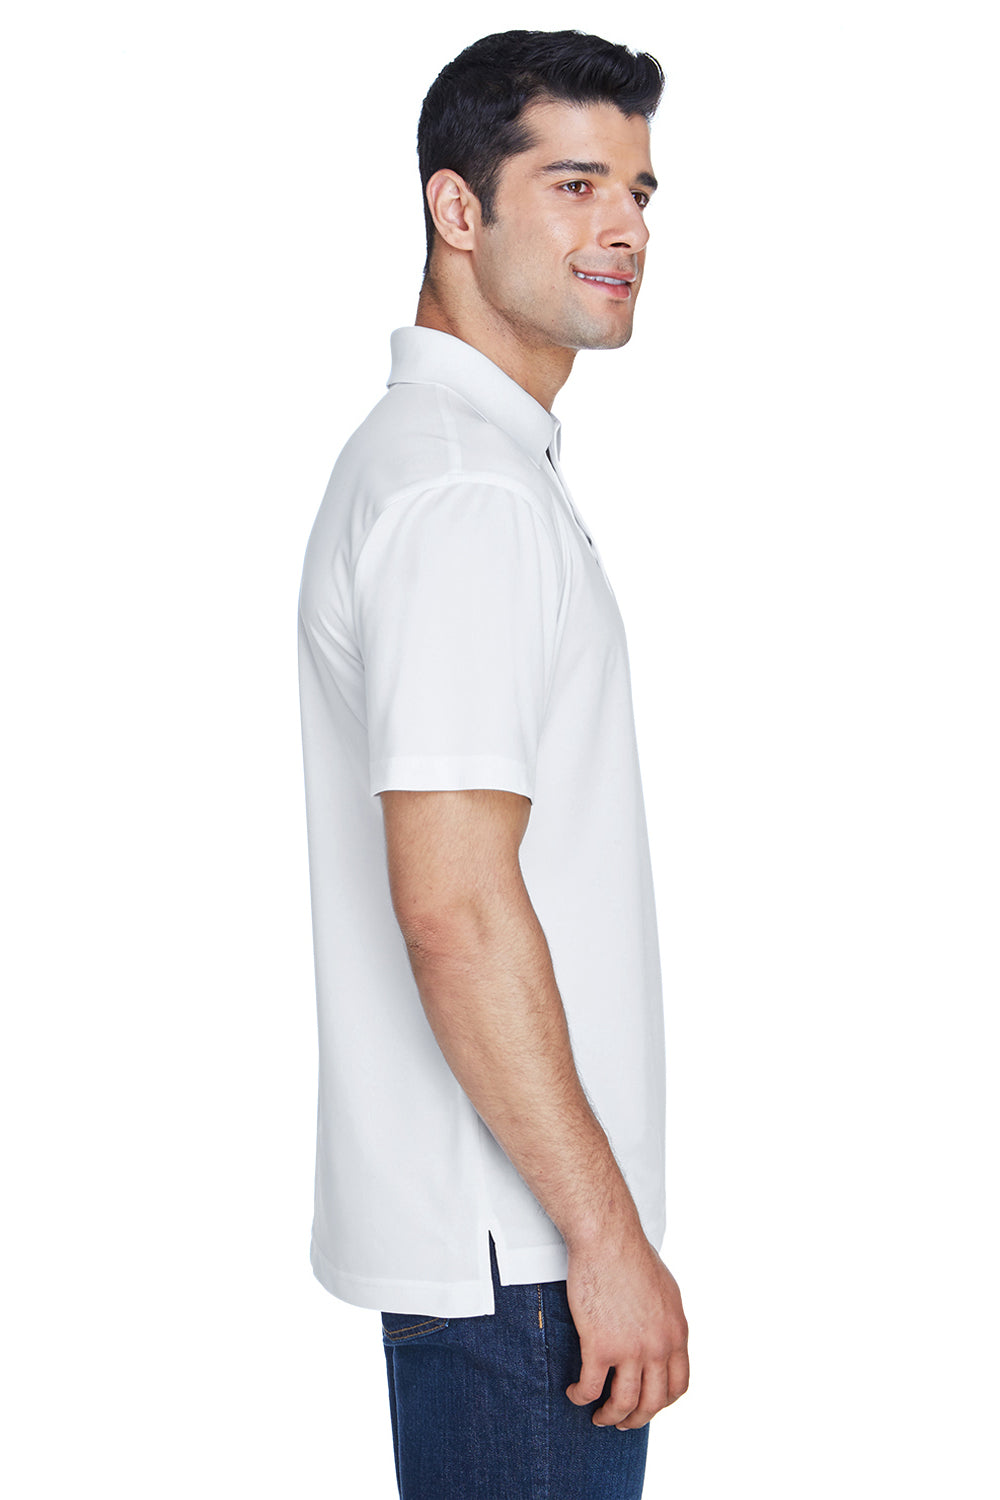 Harriton M315 Mens Polytech Moisture Wicking Short Sleeve Polo Shirt White Side